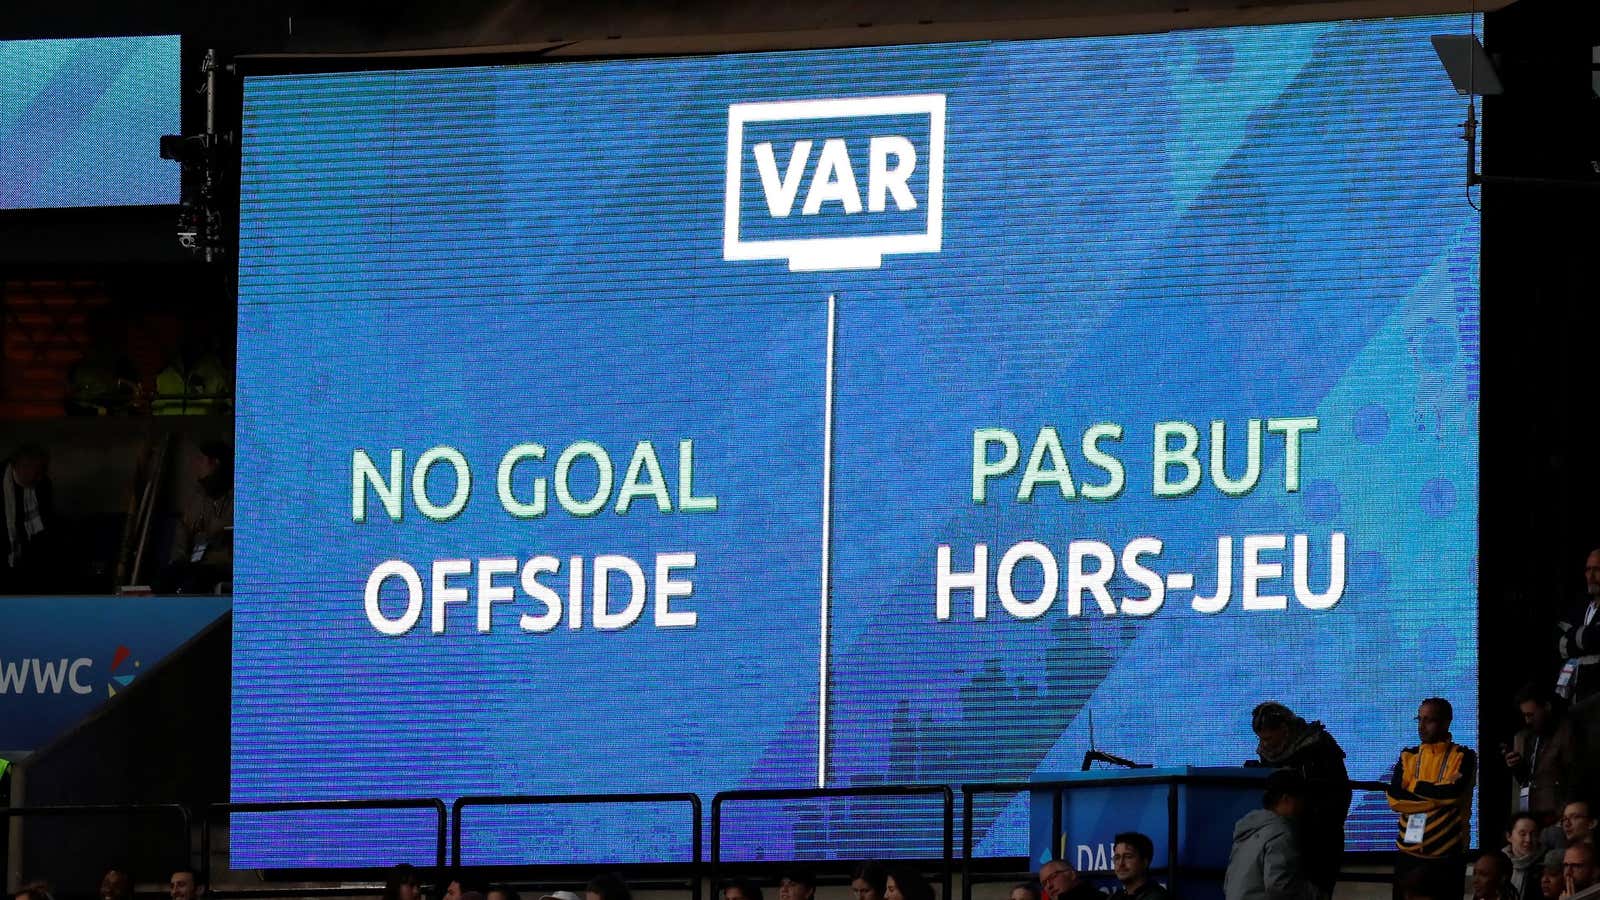 Stadium screen showing a VAR decision to disallow a goal